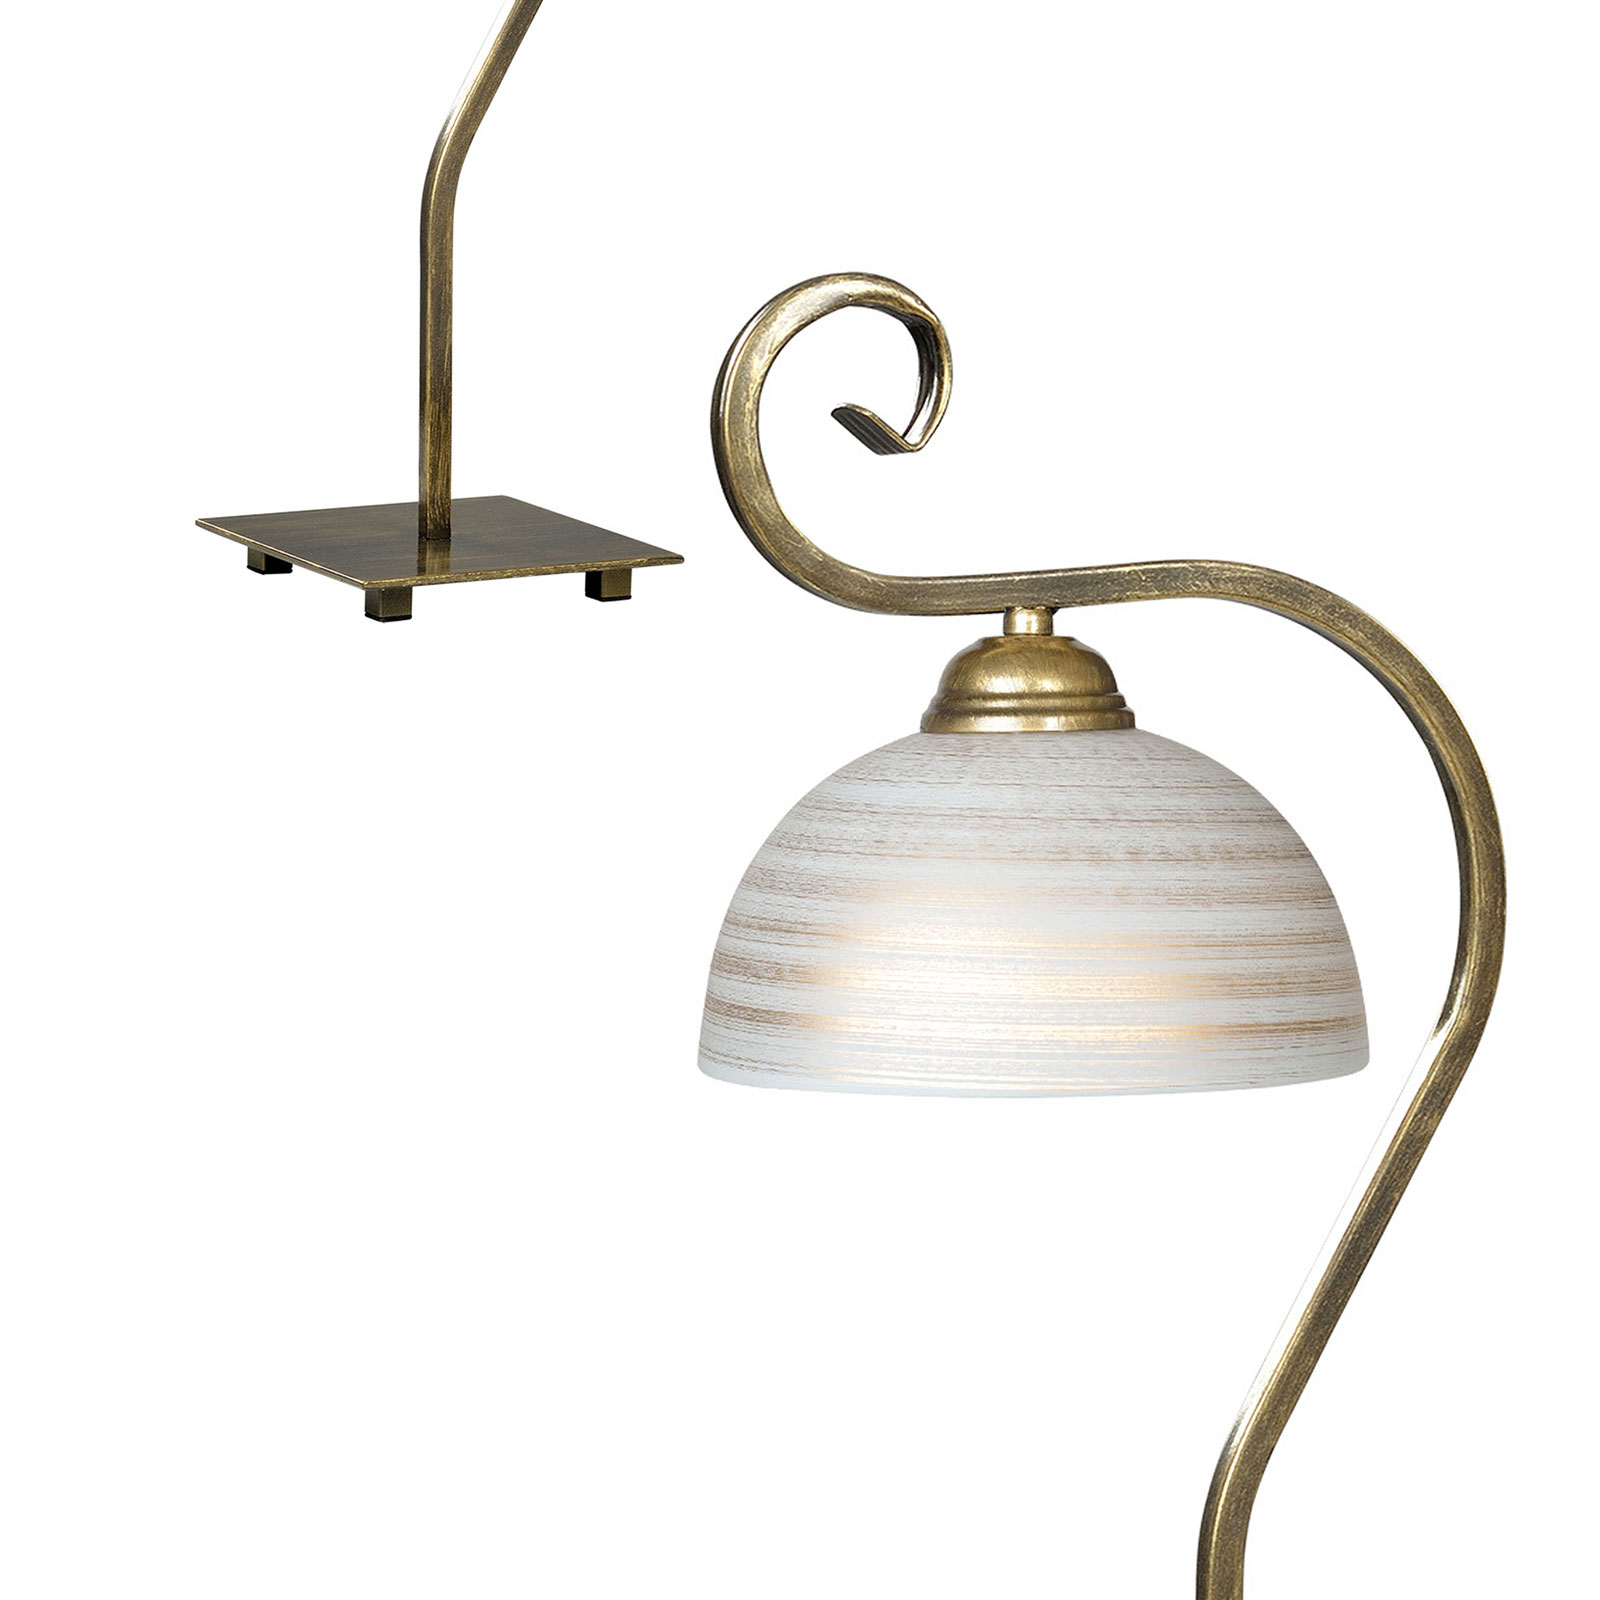 Bordlampe Wivara LN1 i klassisk design, gull